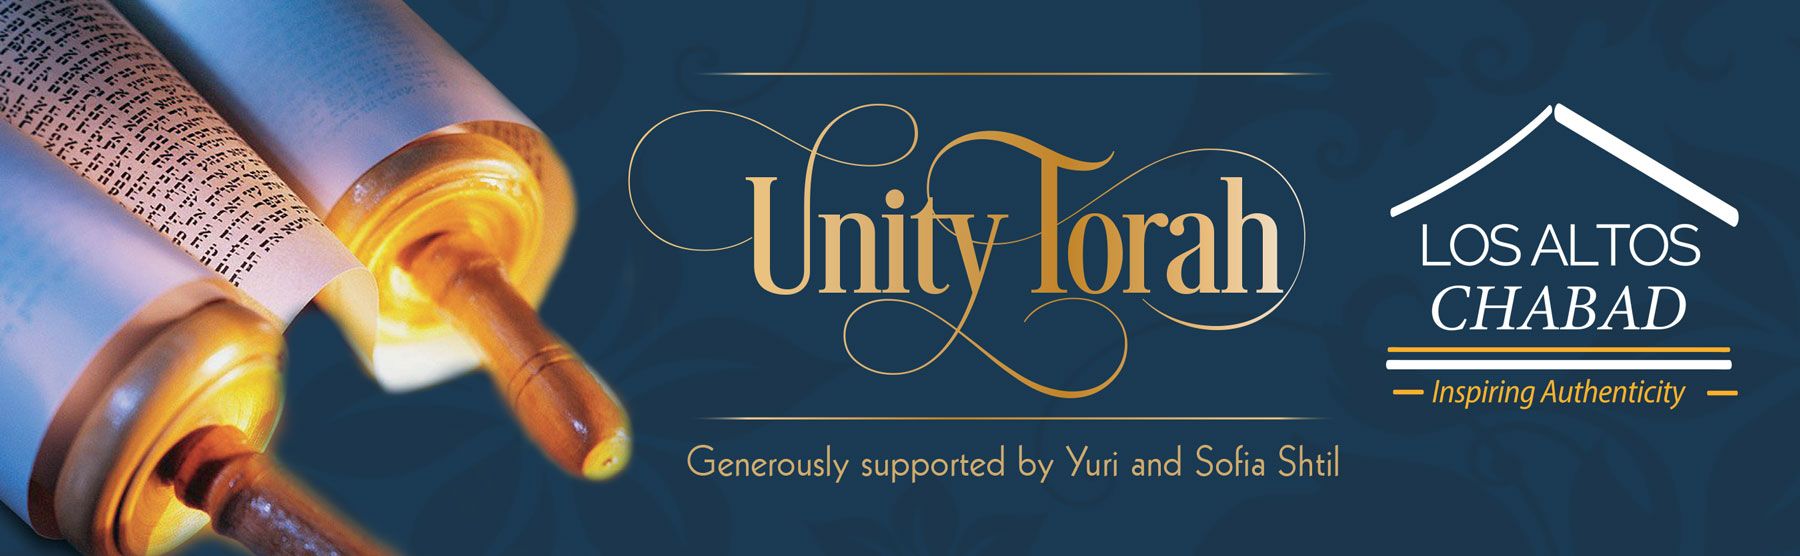 Unity-Healing-Torah-2020_Header.jpg